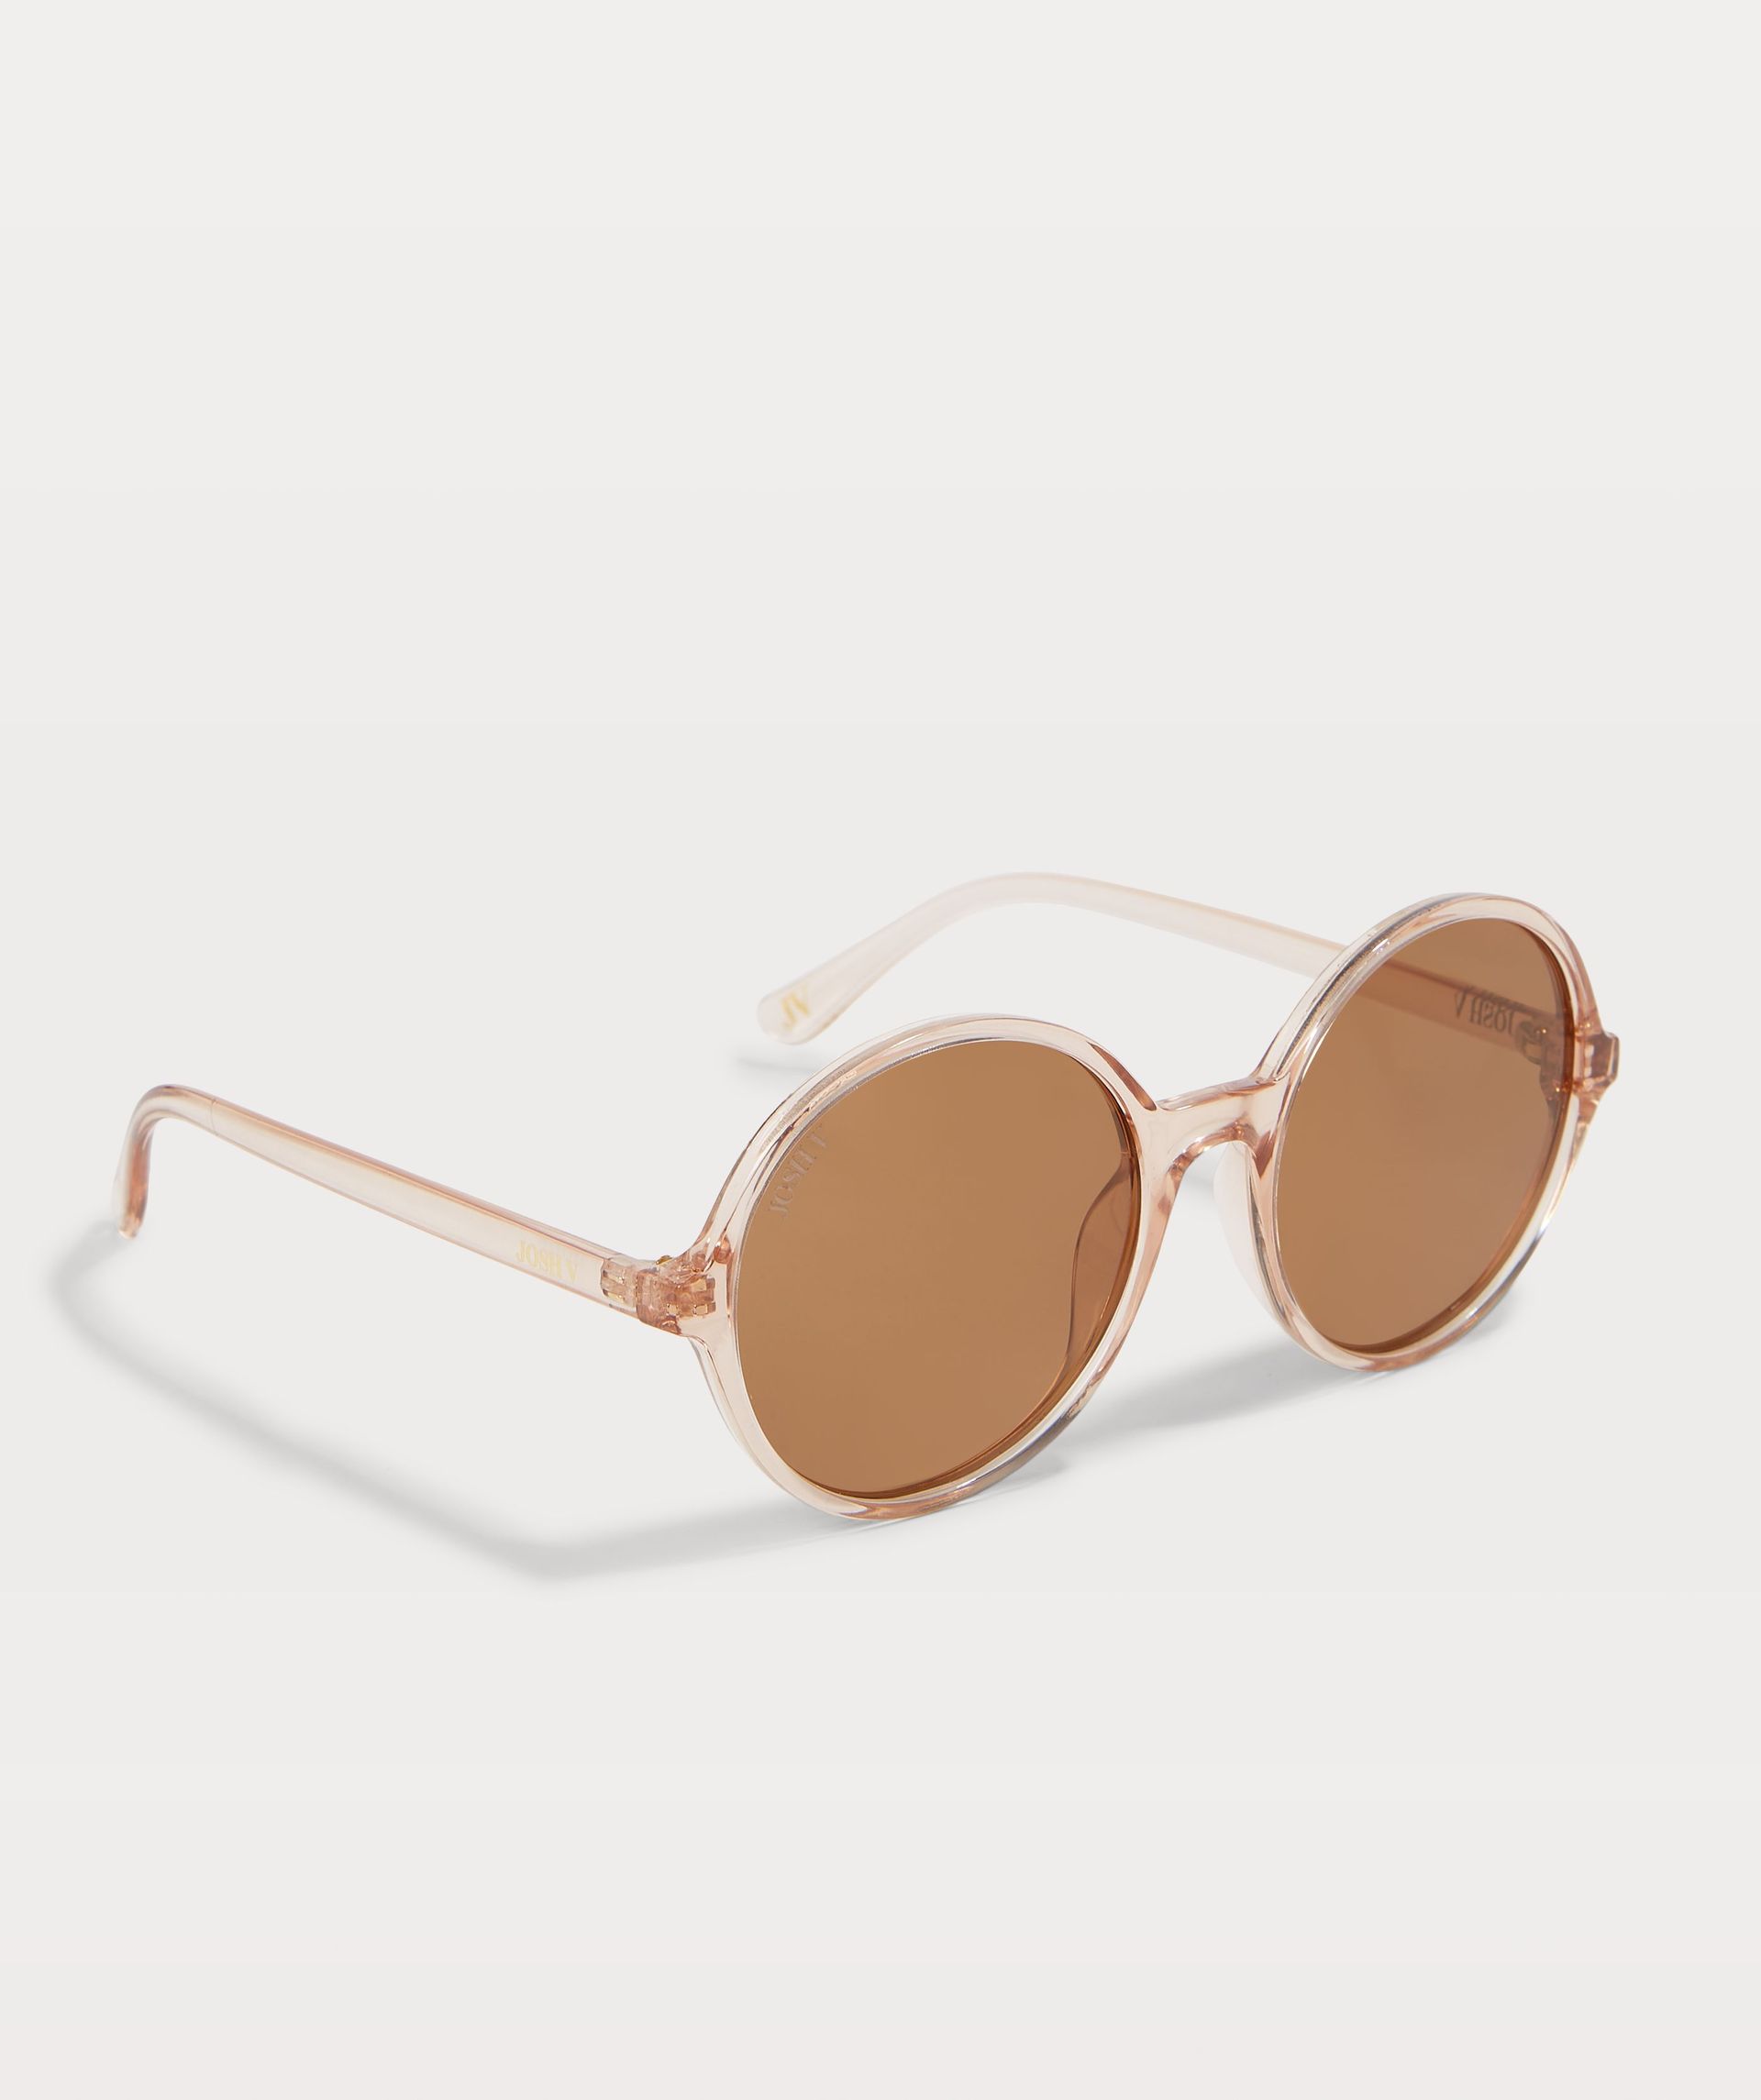 JV LEXY Sunglasses